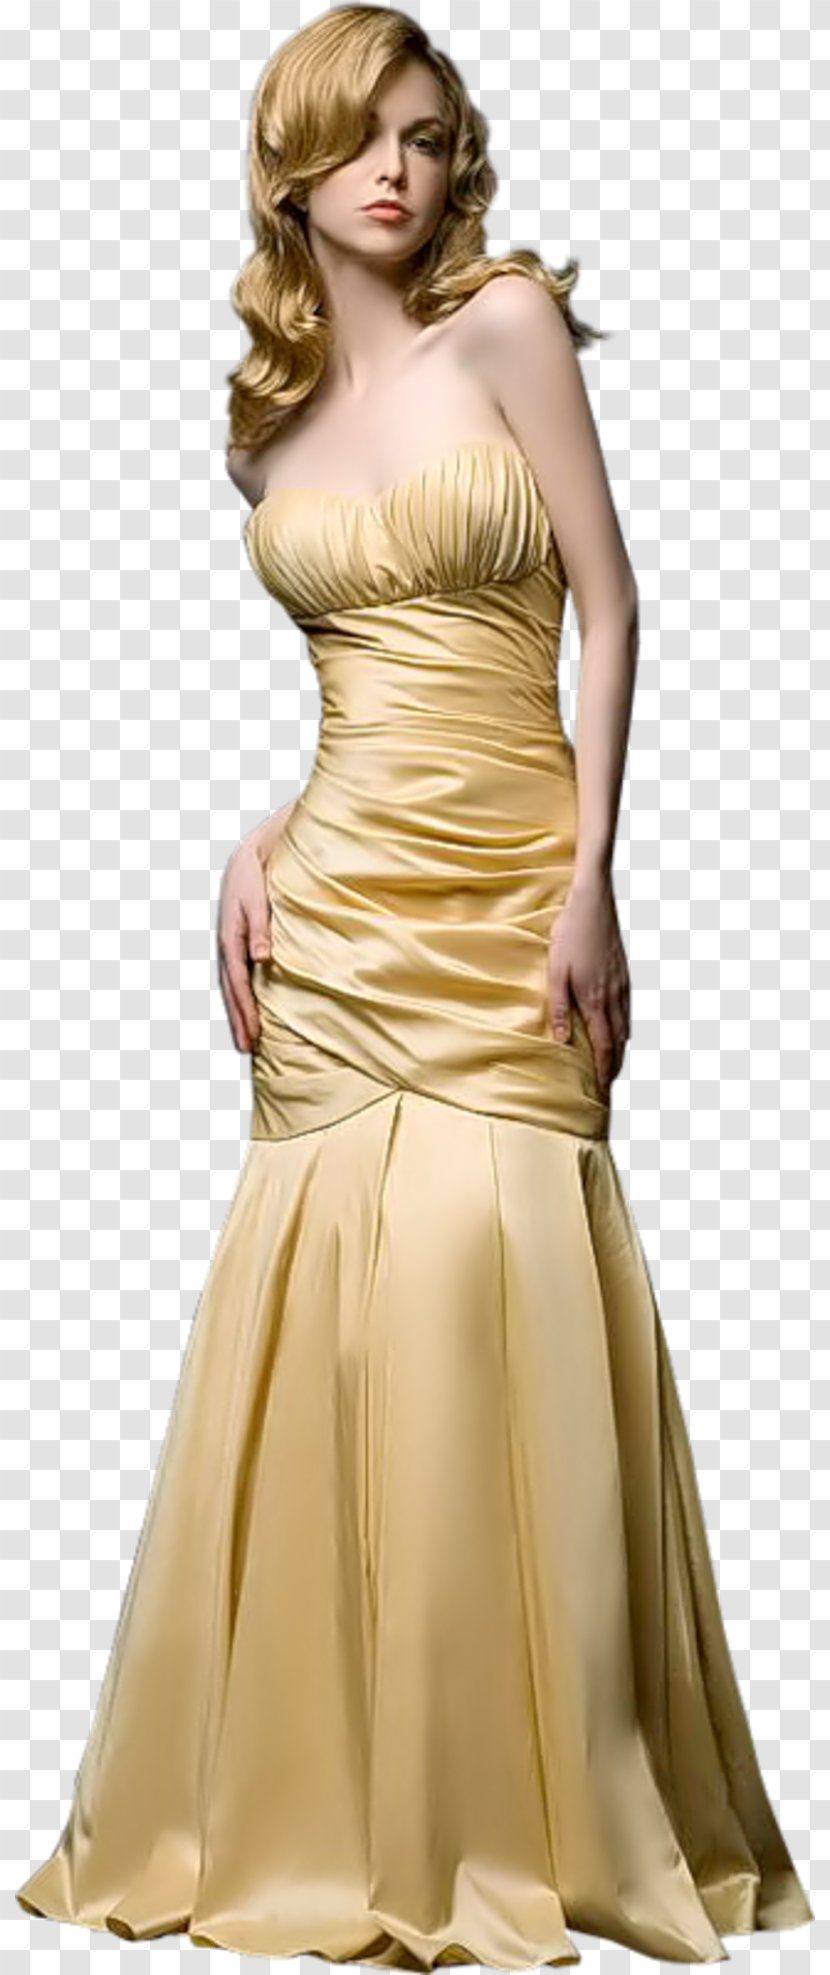 Centerblog Woman - Bridal Party Dress Transparent PNG